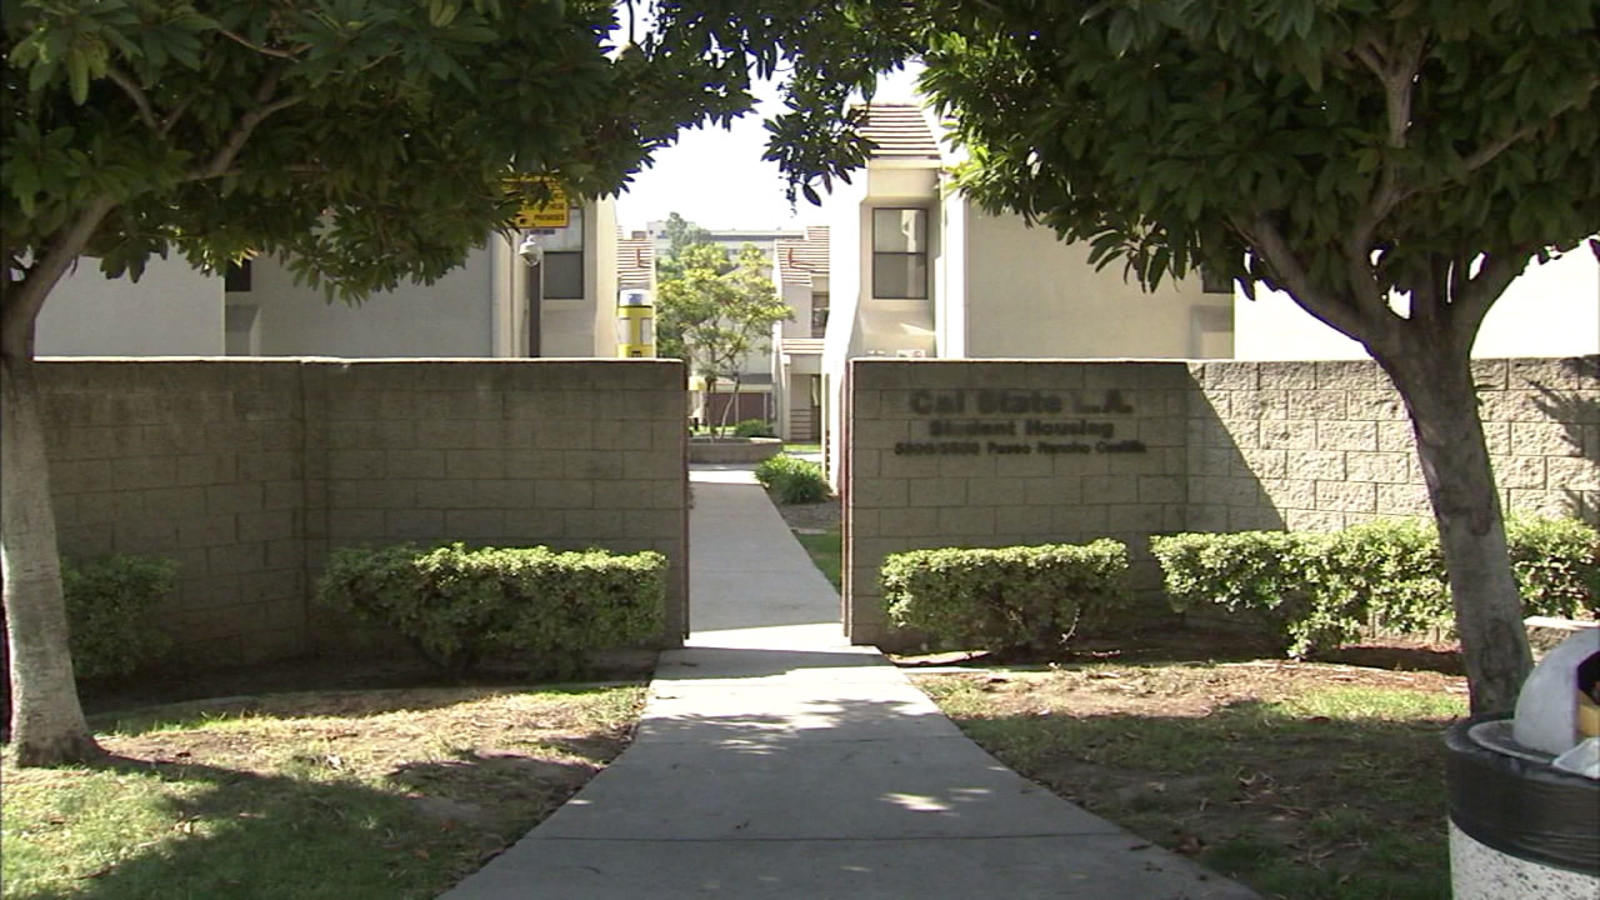 Segregated Housing At California State University La Sparks